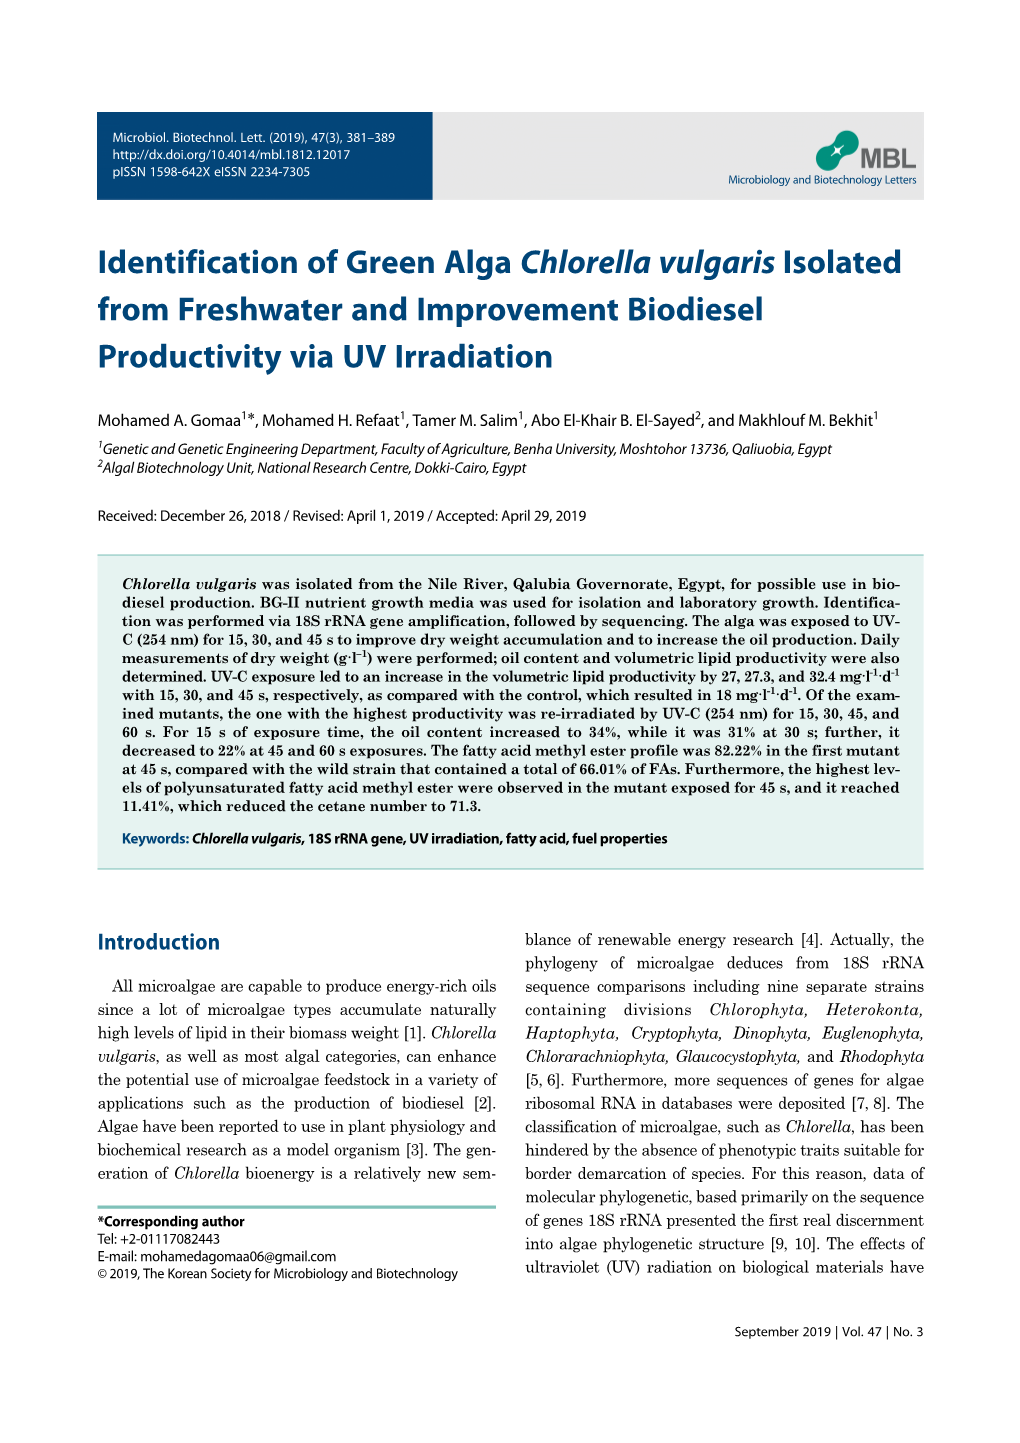 Identification of Green Alga Chlorella Vulgaris Isolated from Freshwater and Improvement Biodiesel Productivity Via UV Irradiation